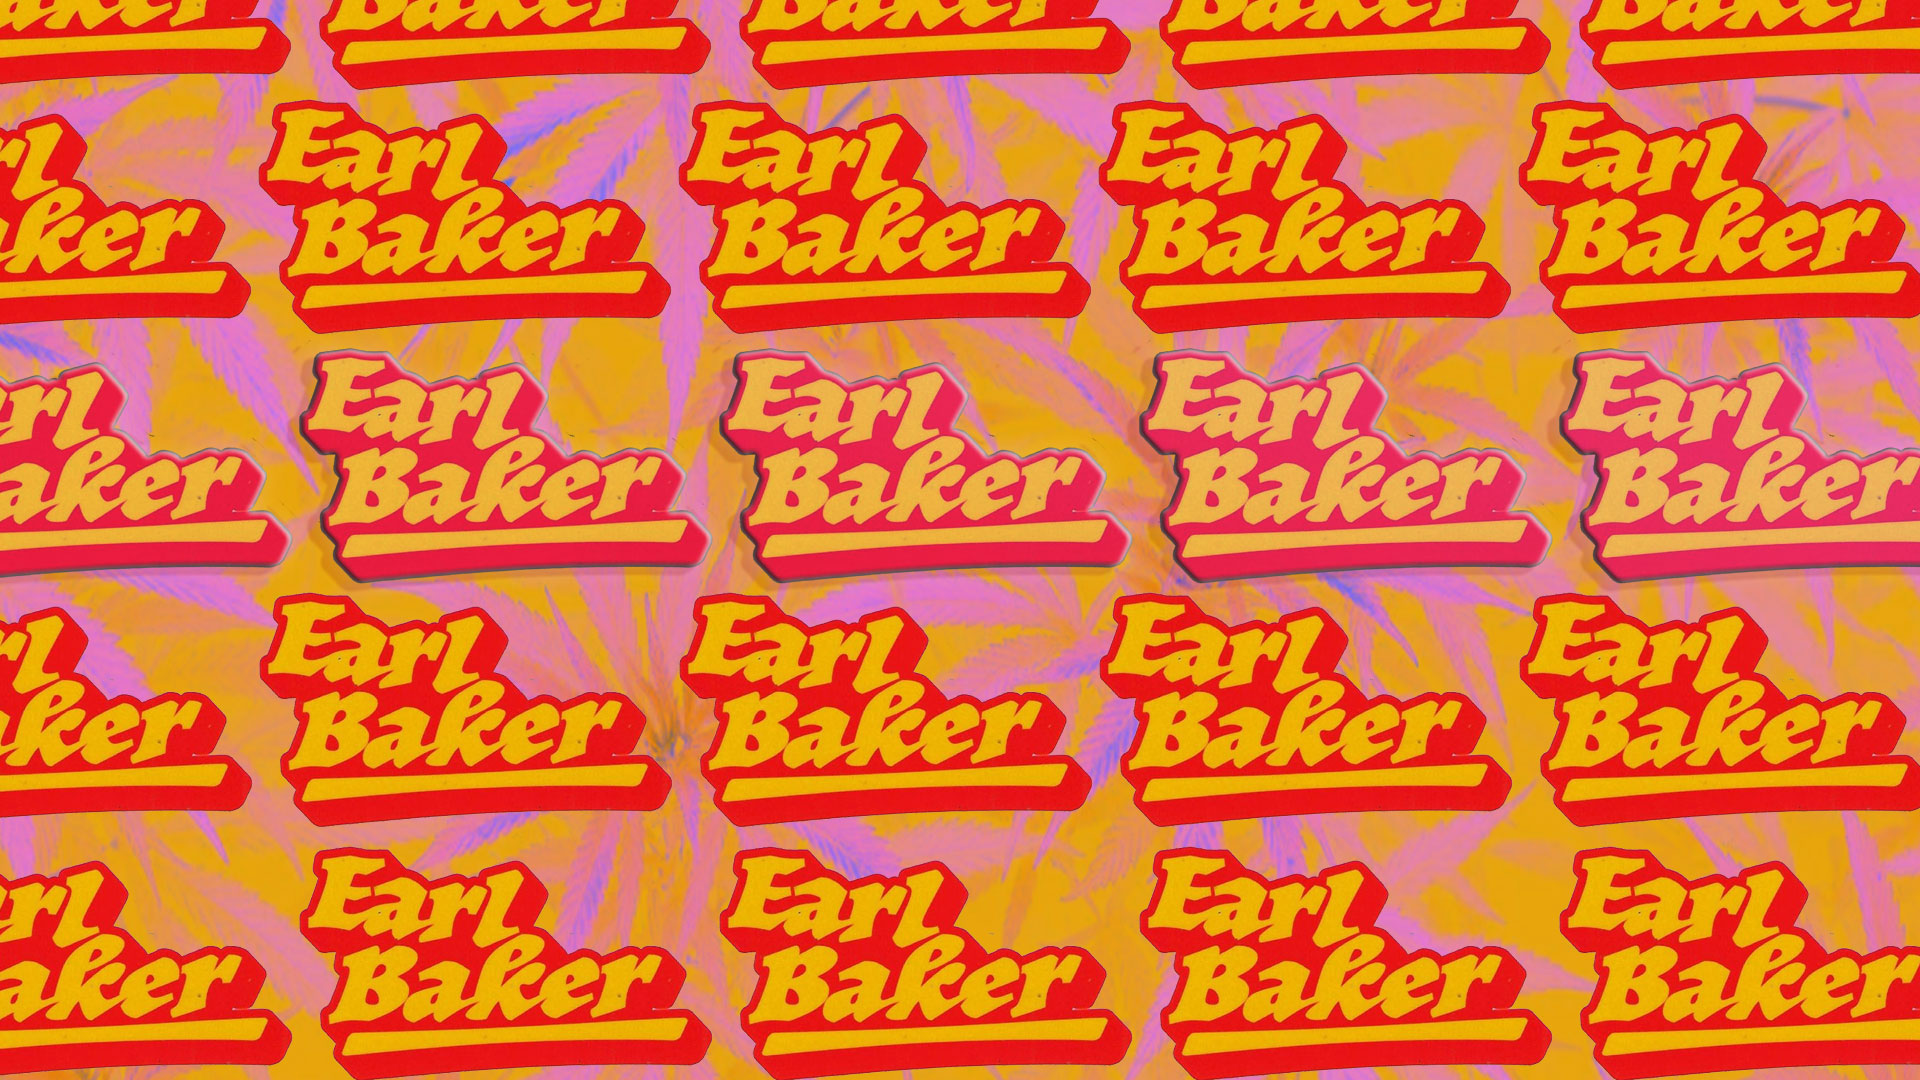 Buy Earl Baker Flower! Unreal Cannabis!